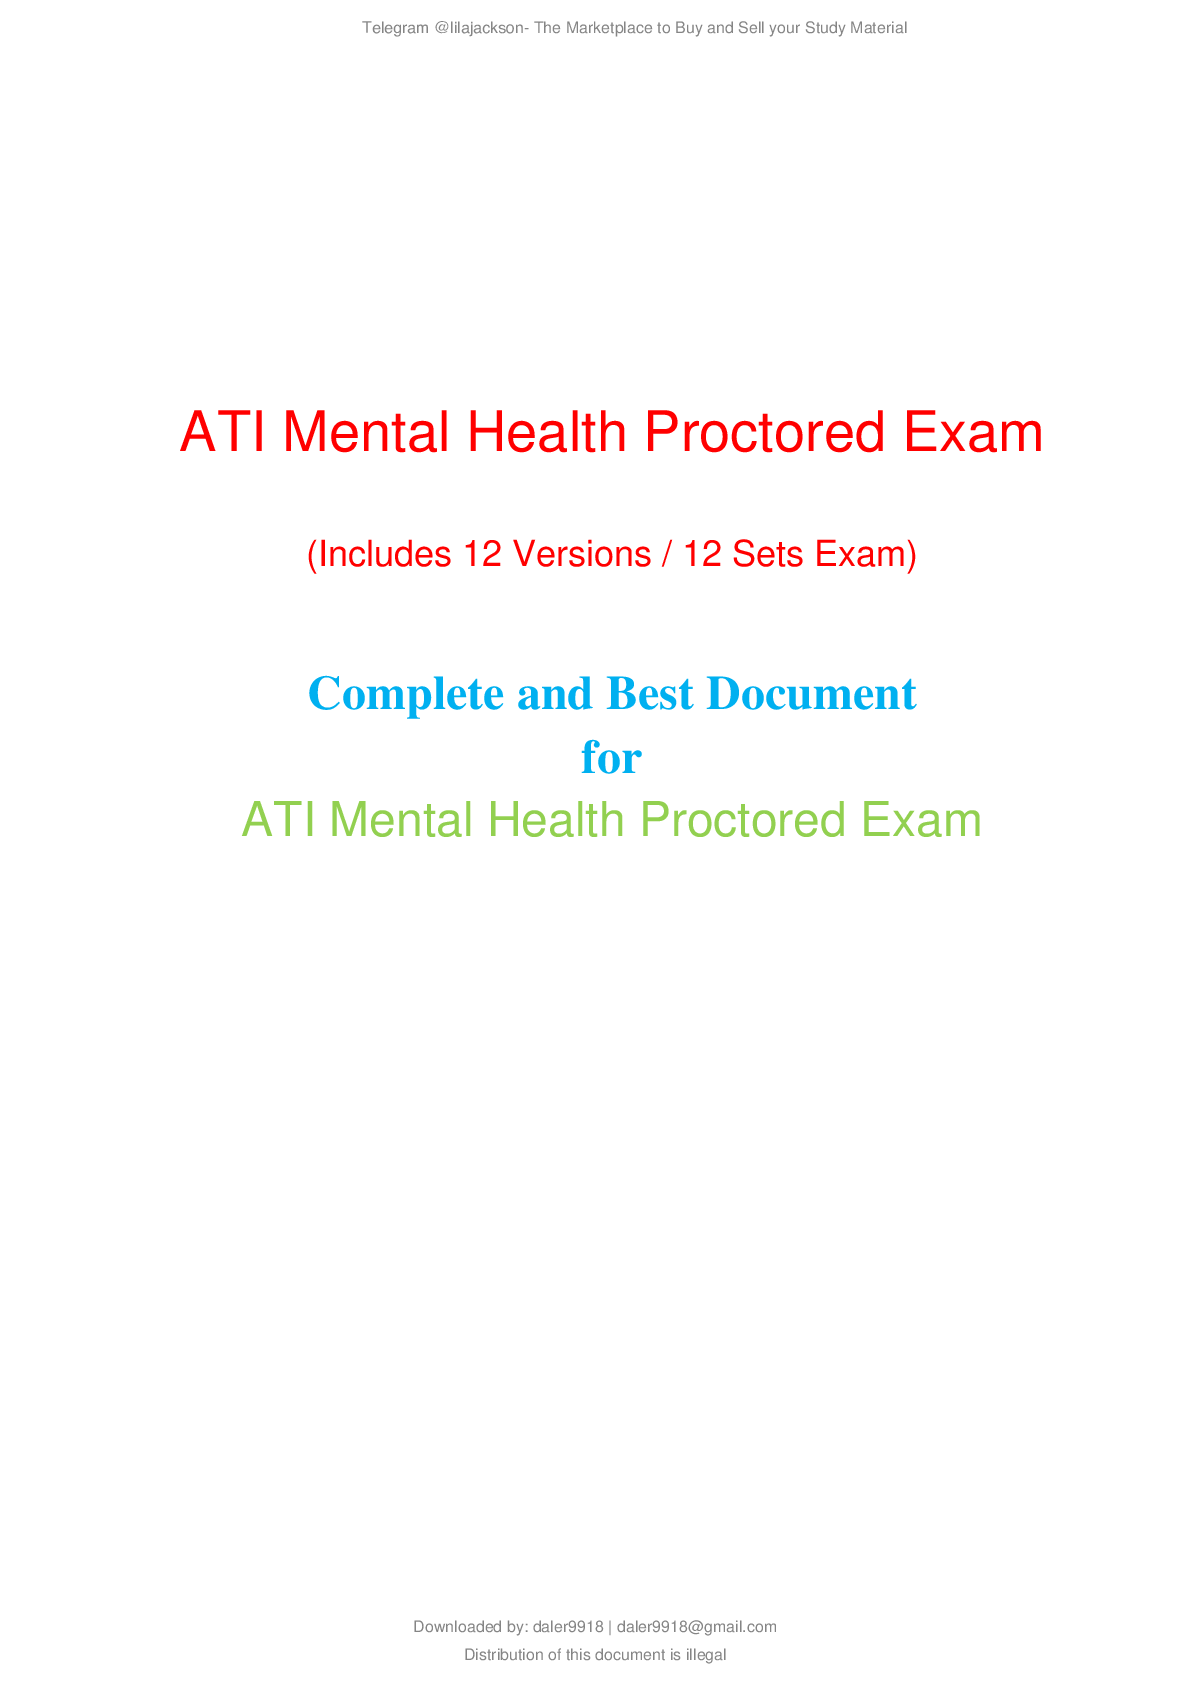 ATI Mental Health Proctored Exam (Includes 12 Versions / 12 Sets Exam)